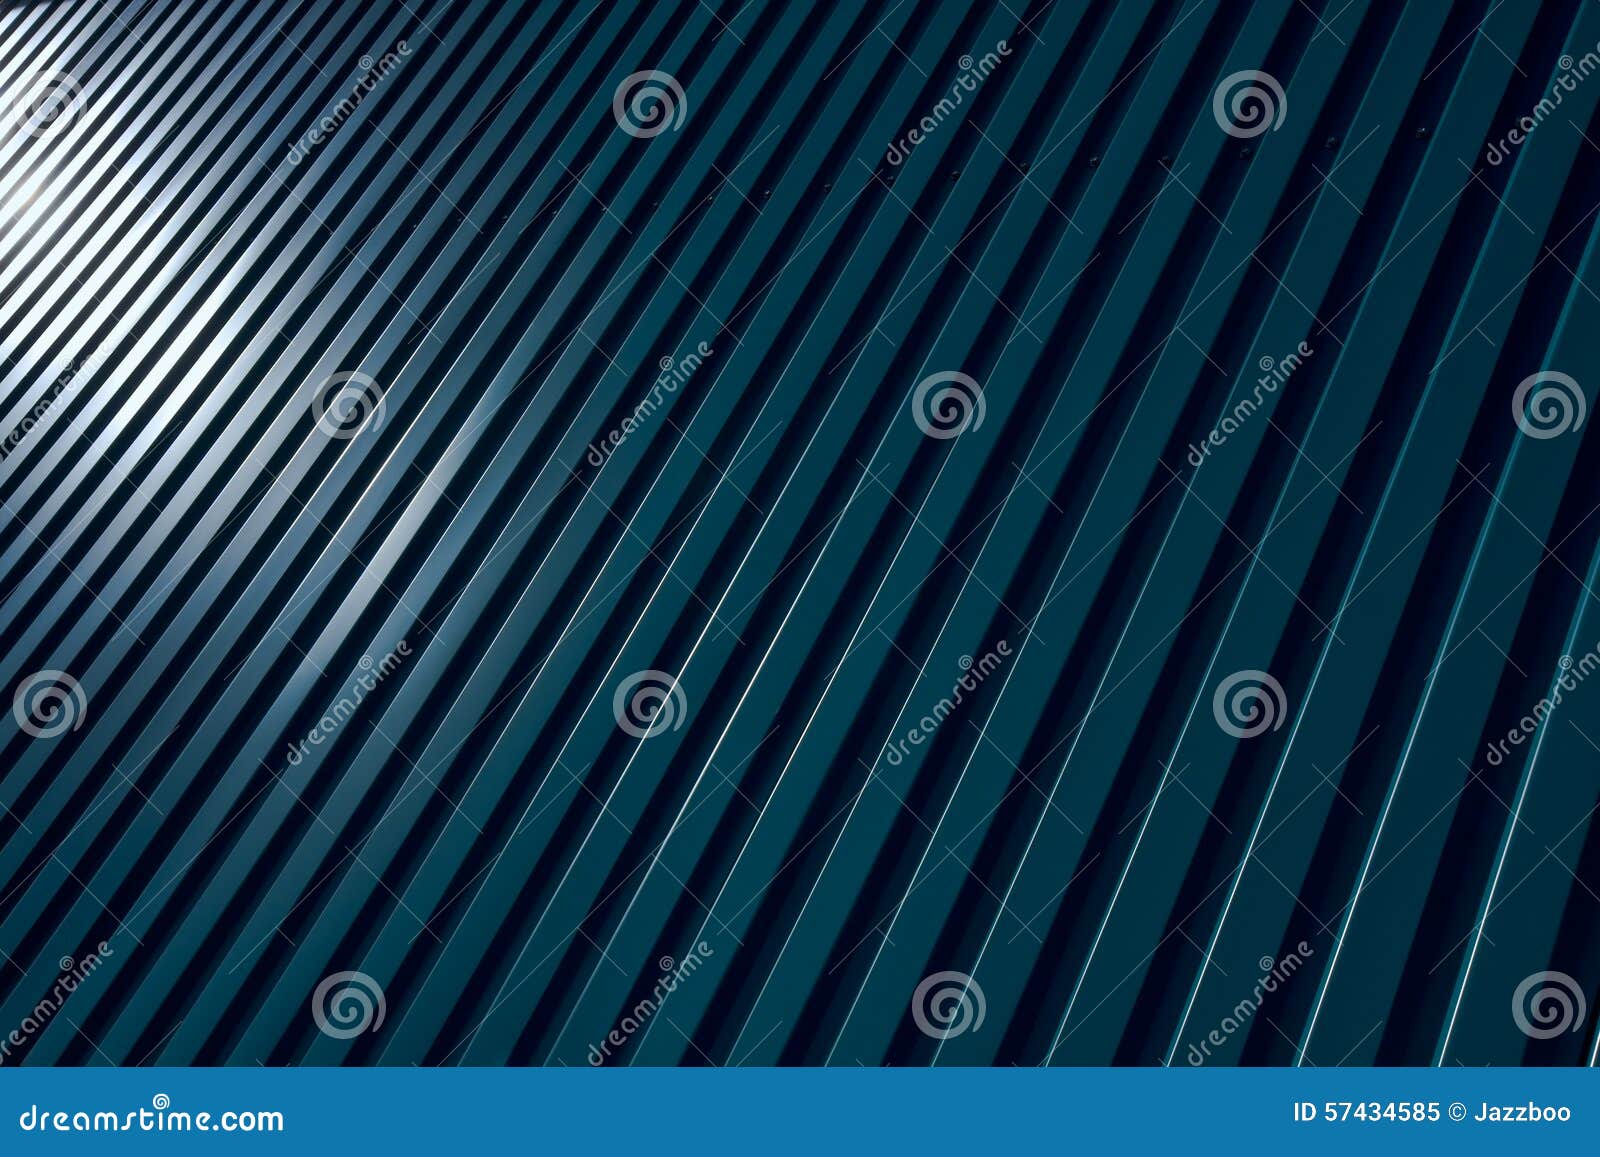 Corrugated metal texture stock image. Image of steel - 57434585